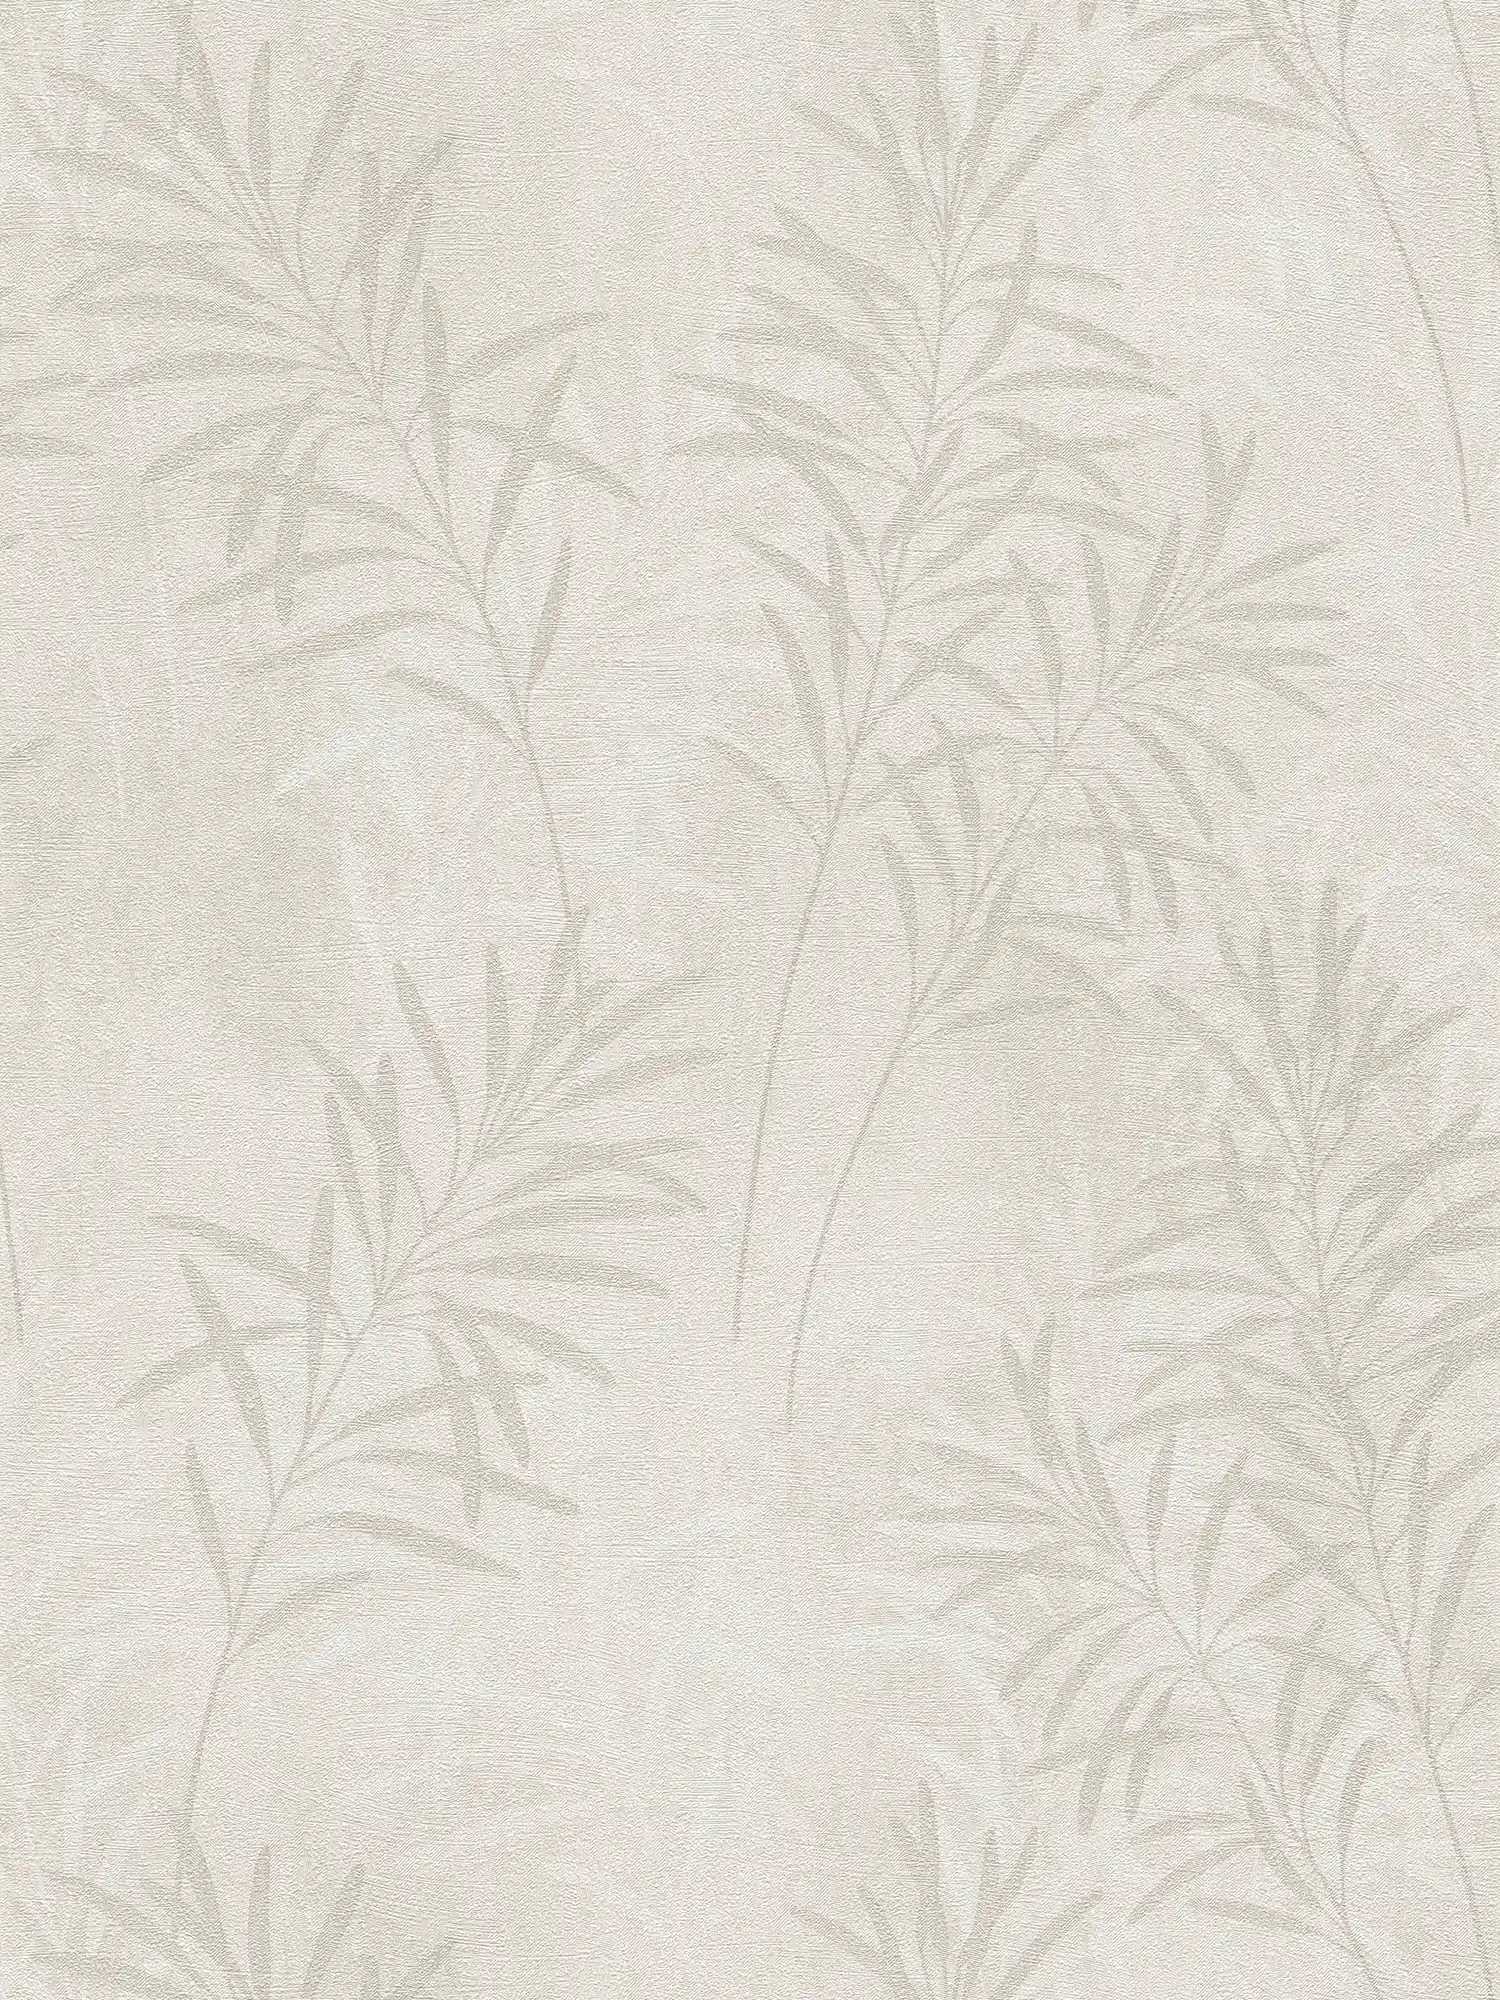         Scandinavian style non-woven wallpaper with floral grasses - cream, beige, metallic
    